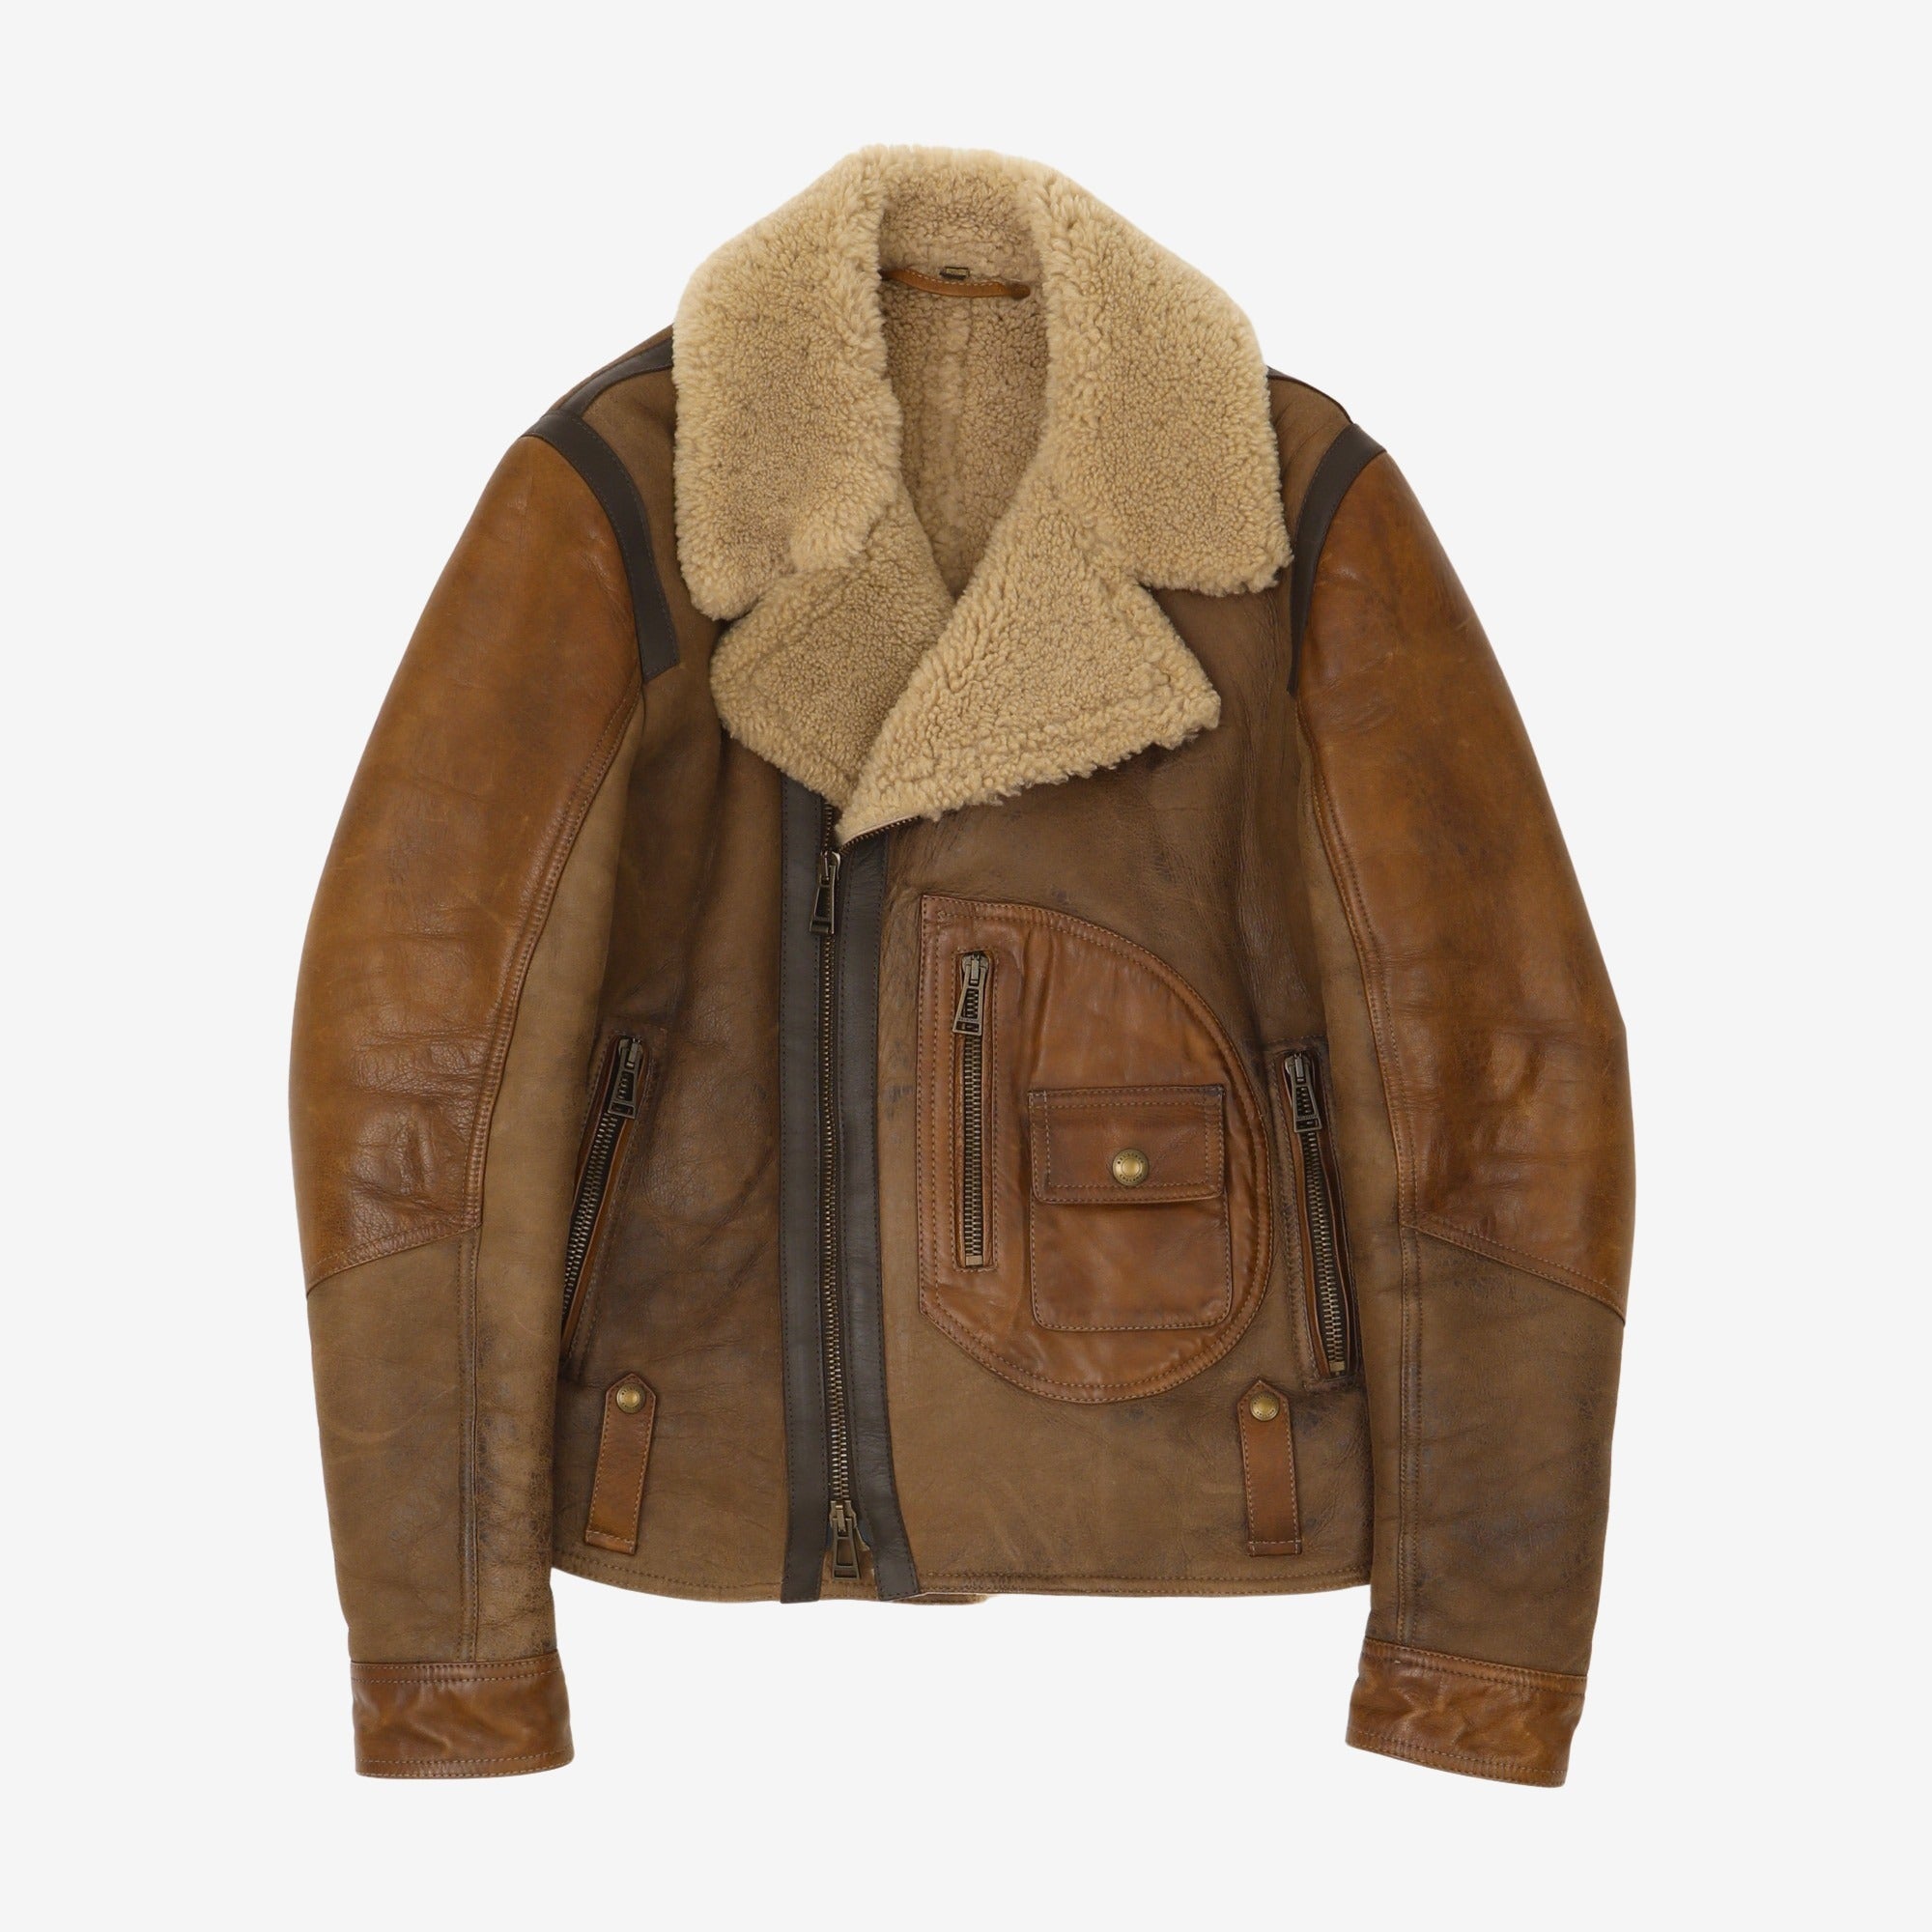 Danescroft Leather Jacket